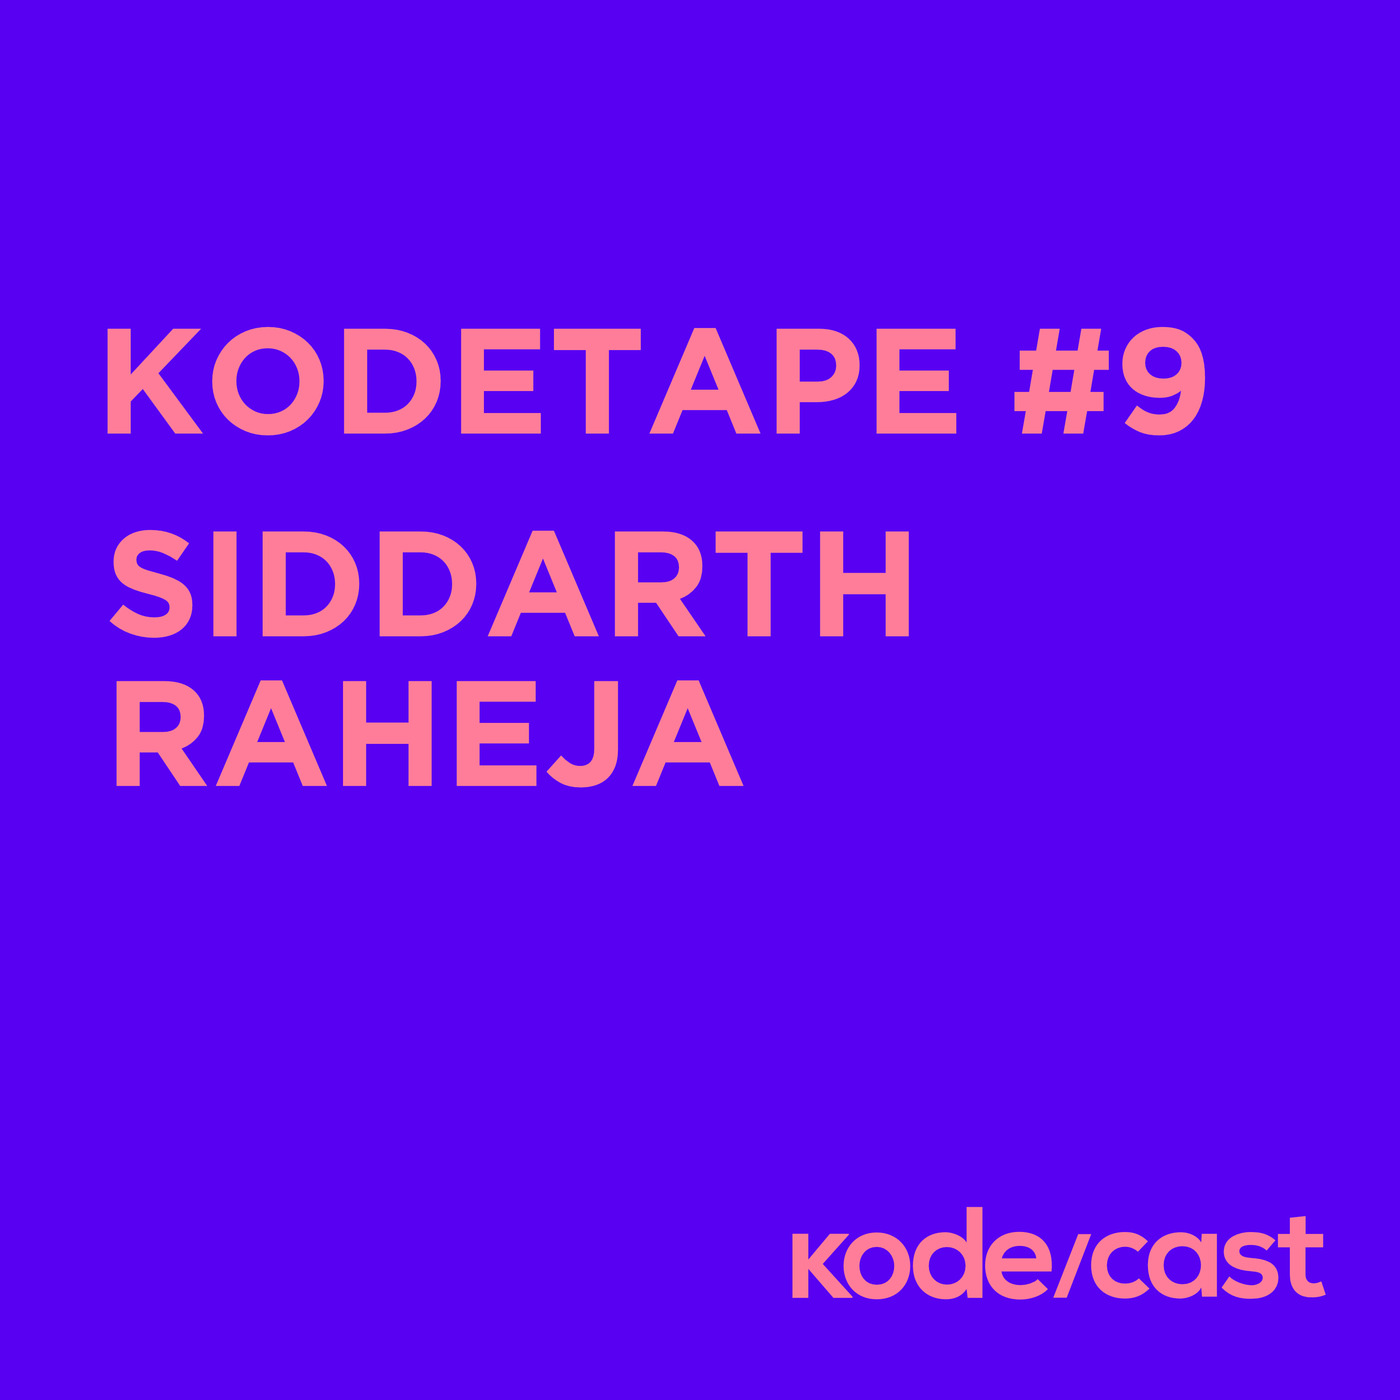 kodetape #9 Siddarth Raheja